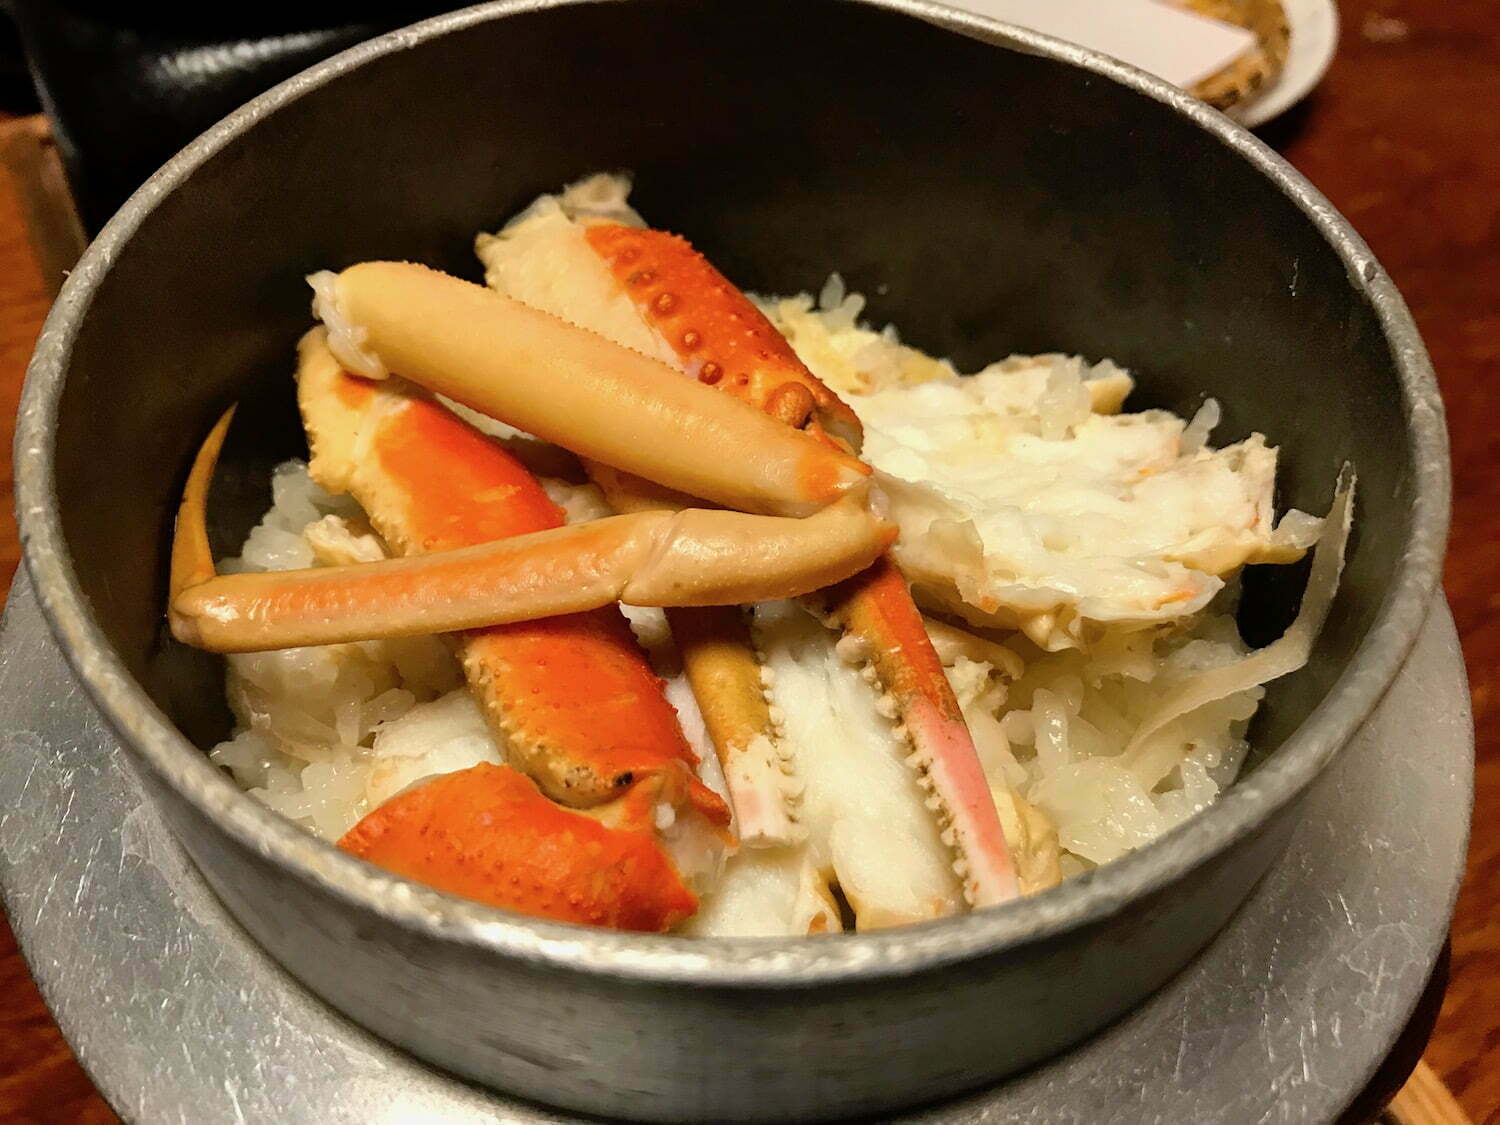 Snow crab rice